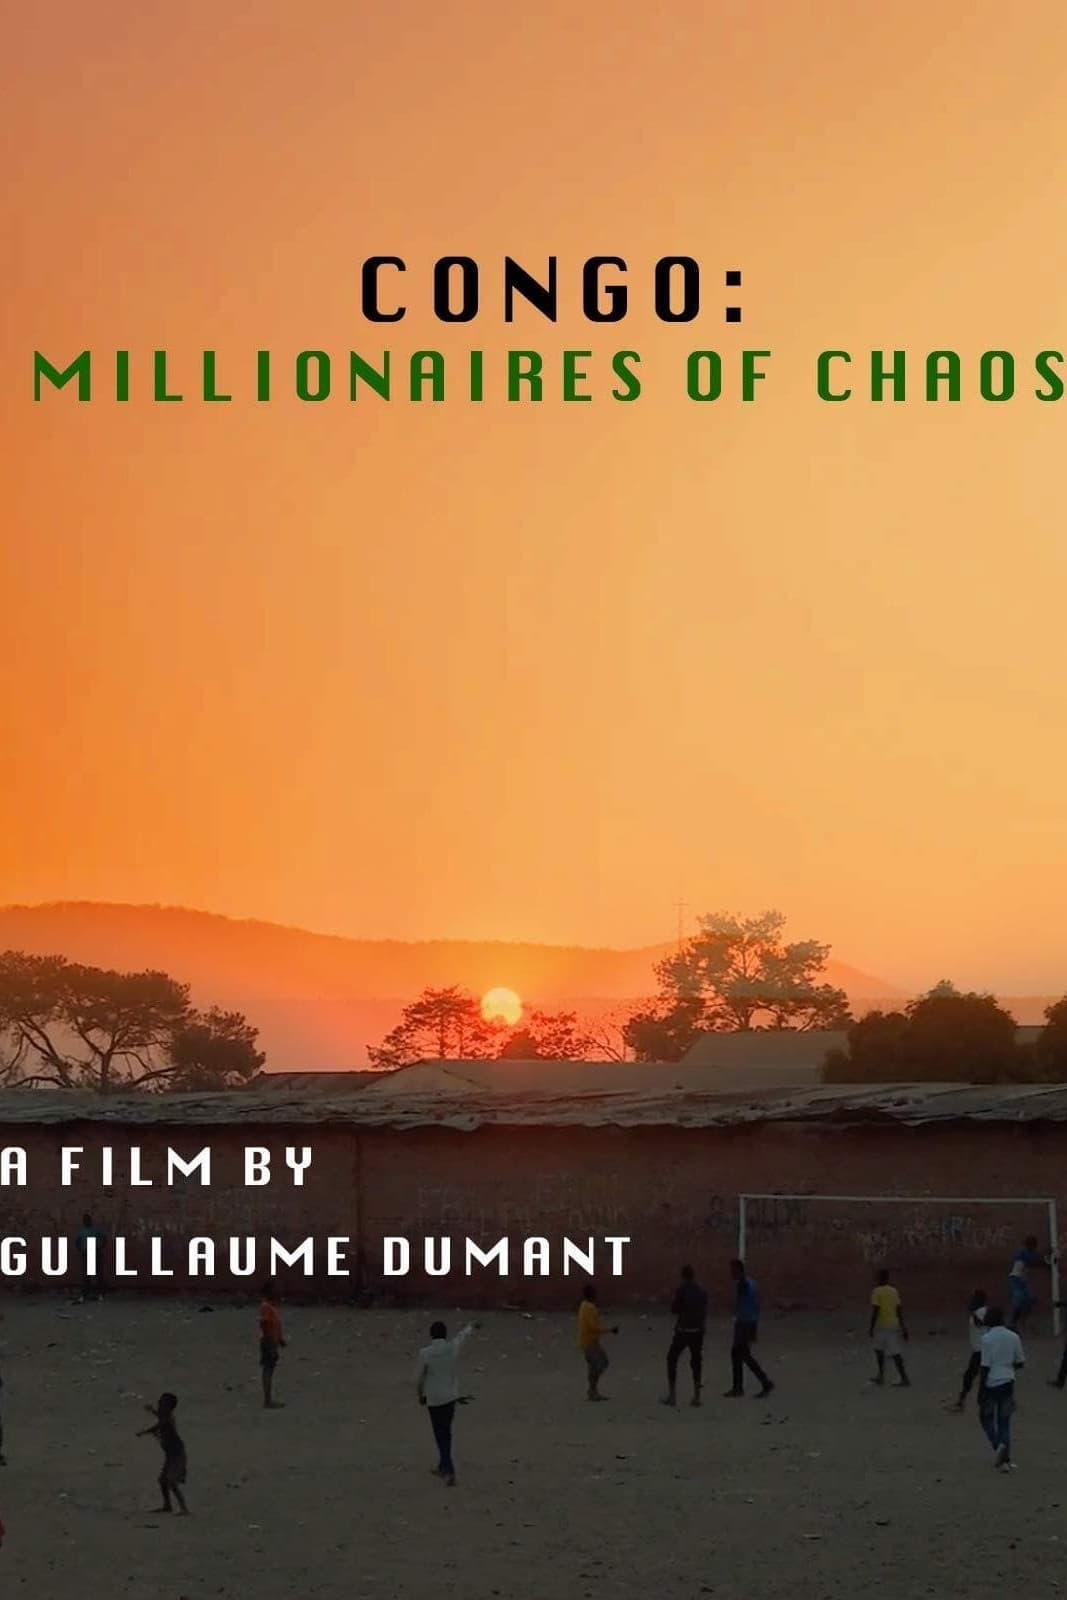 Congo: Millionaires of Chaos